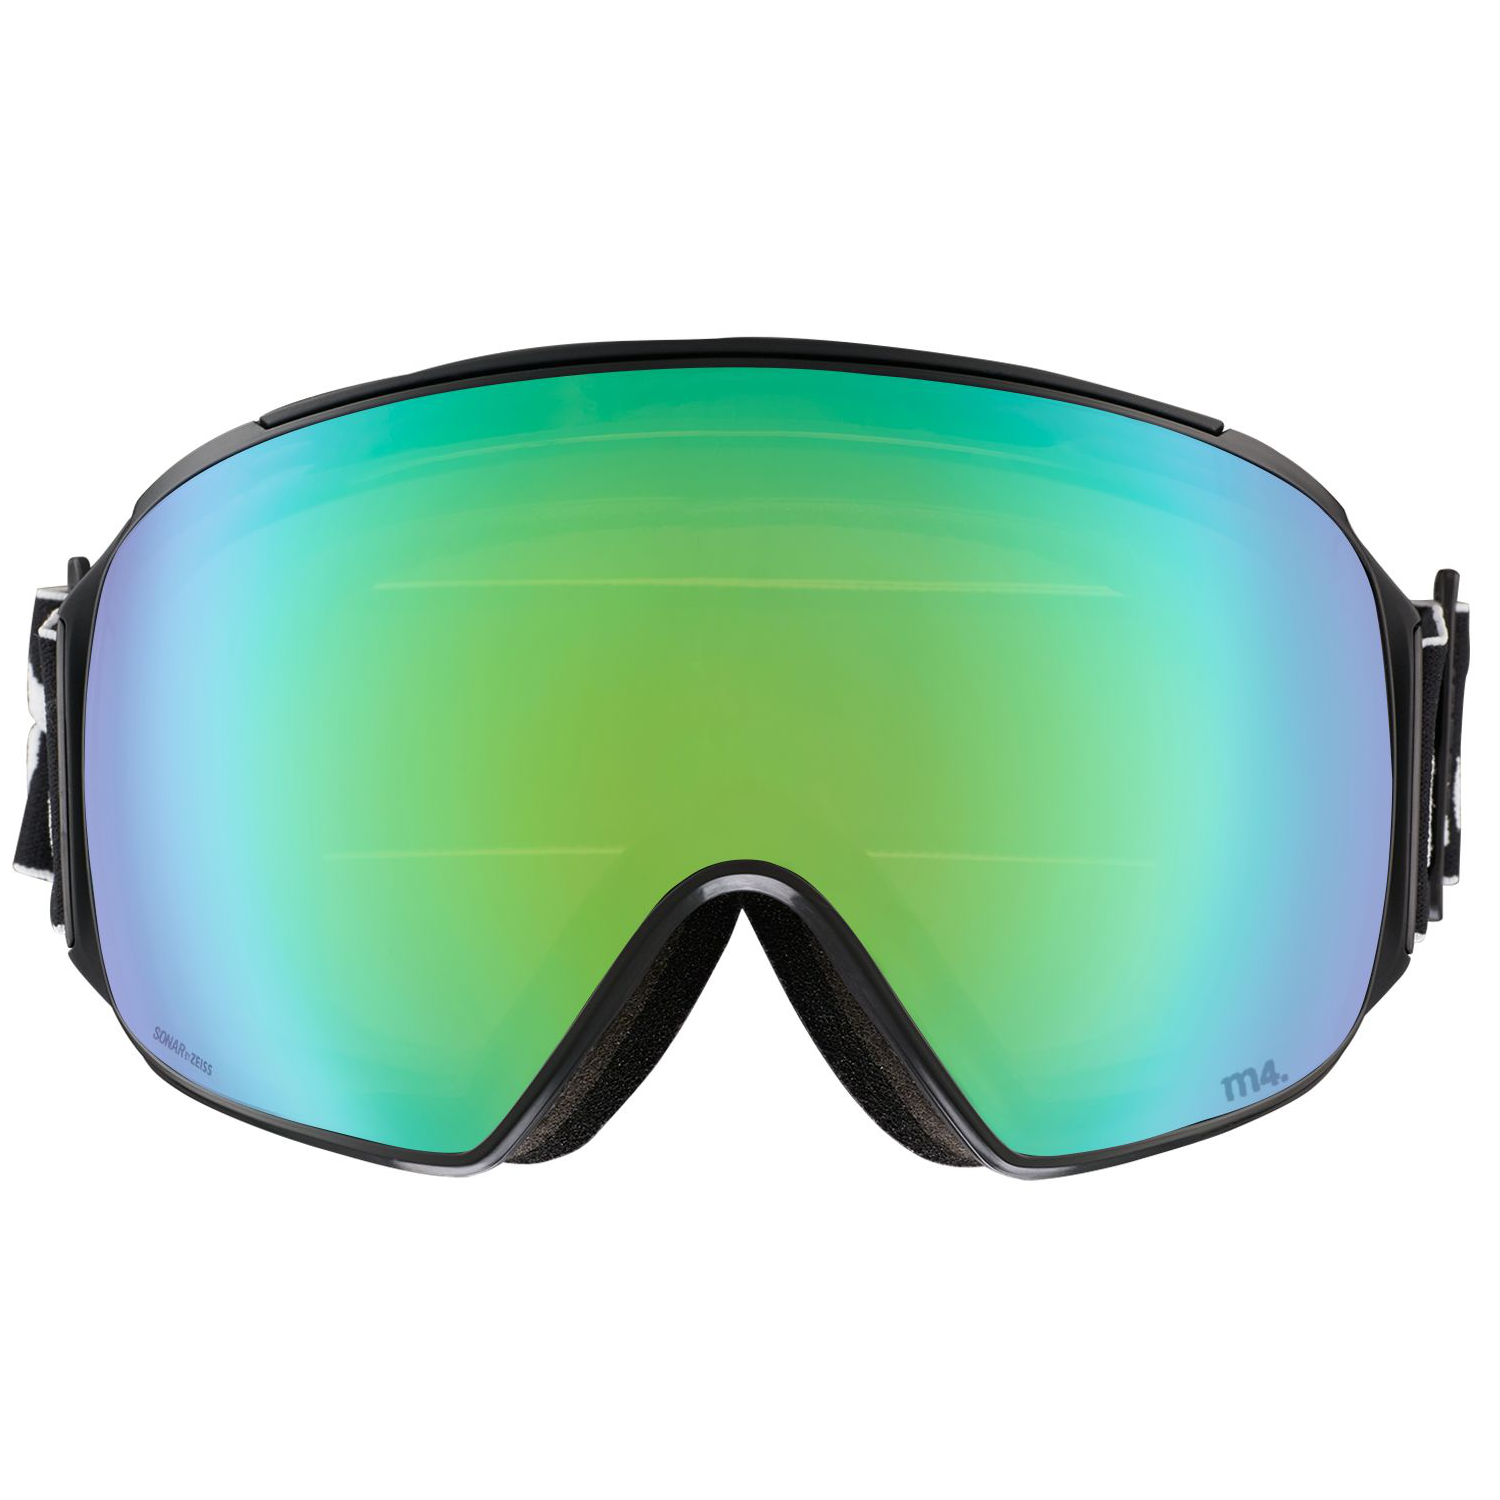 Masque de Ski M4 MFI Toric - Black - Sonar Green + Sonar Infrared Blue